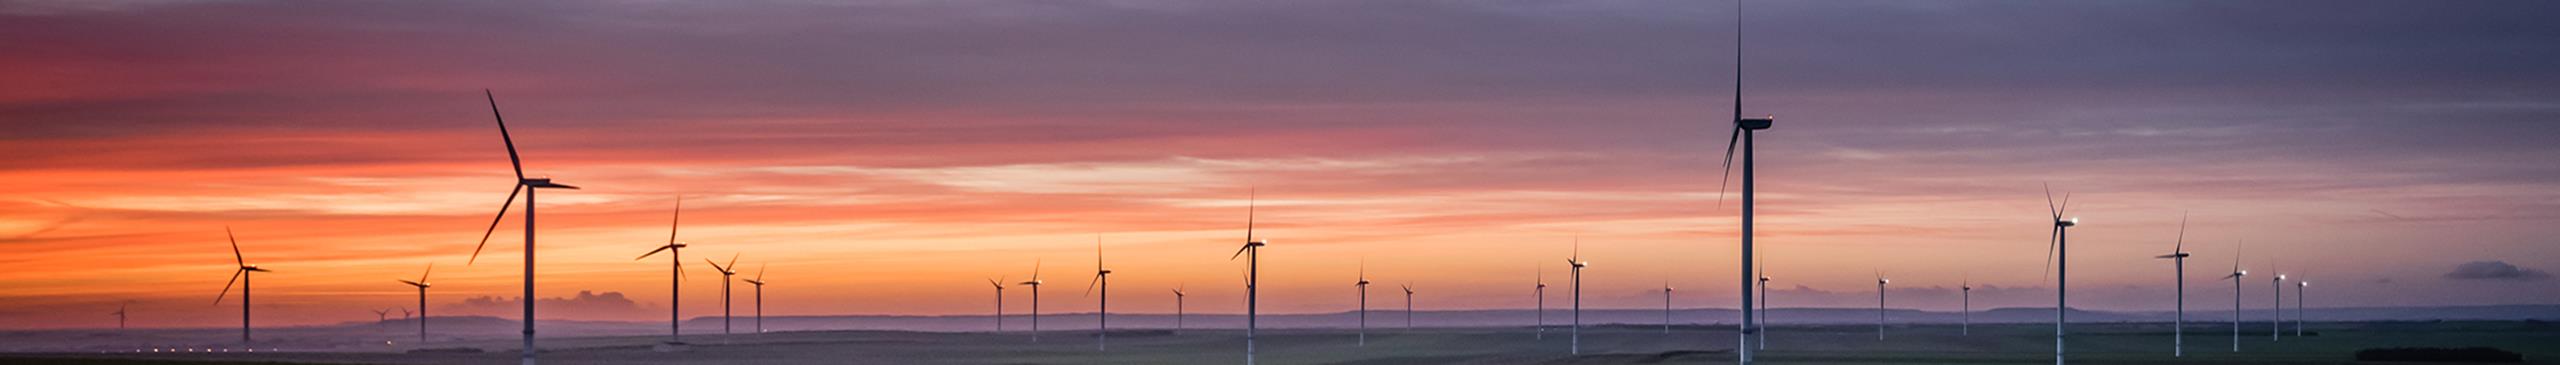 Panorama of wind turbines